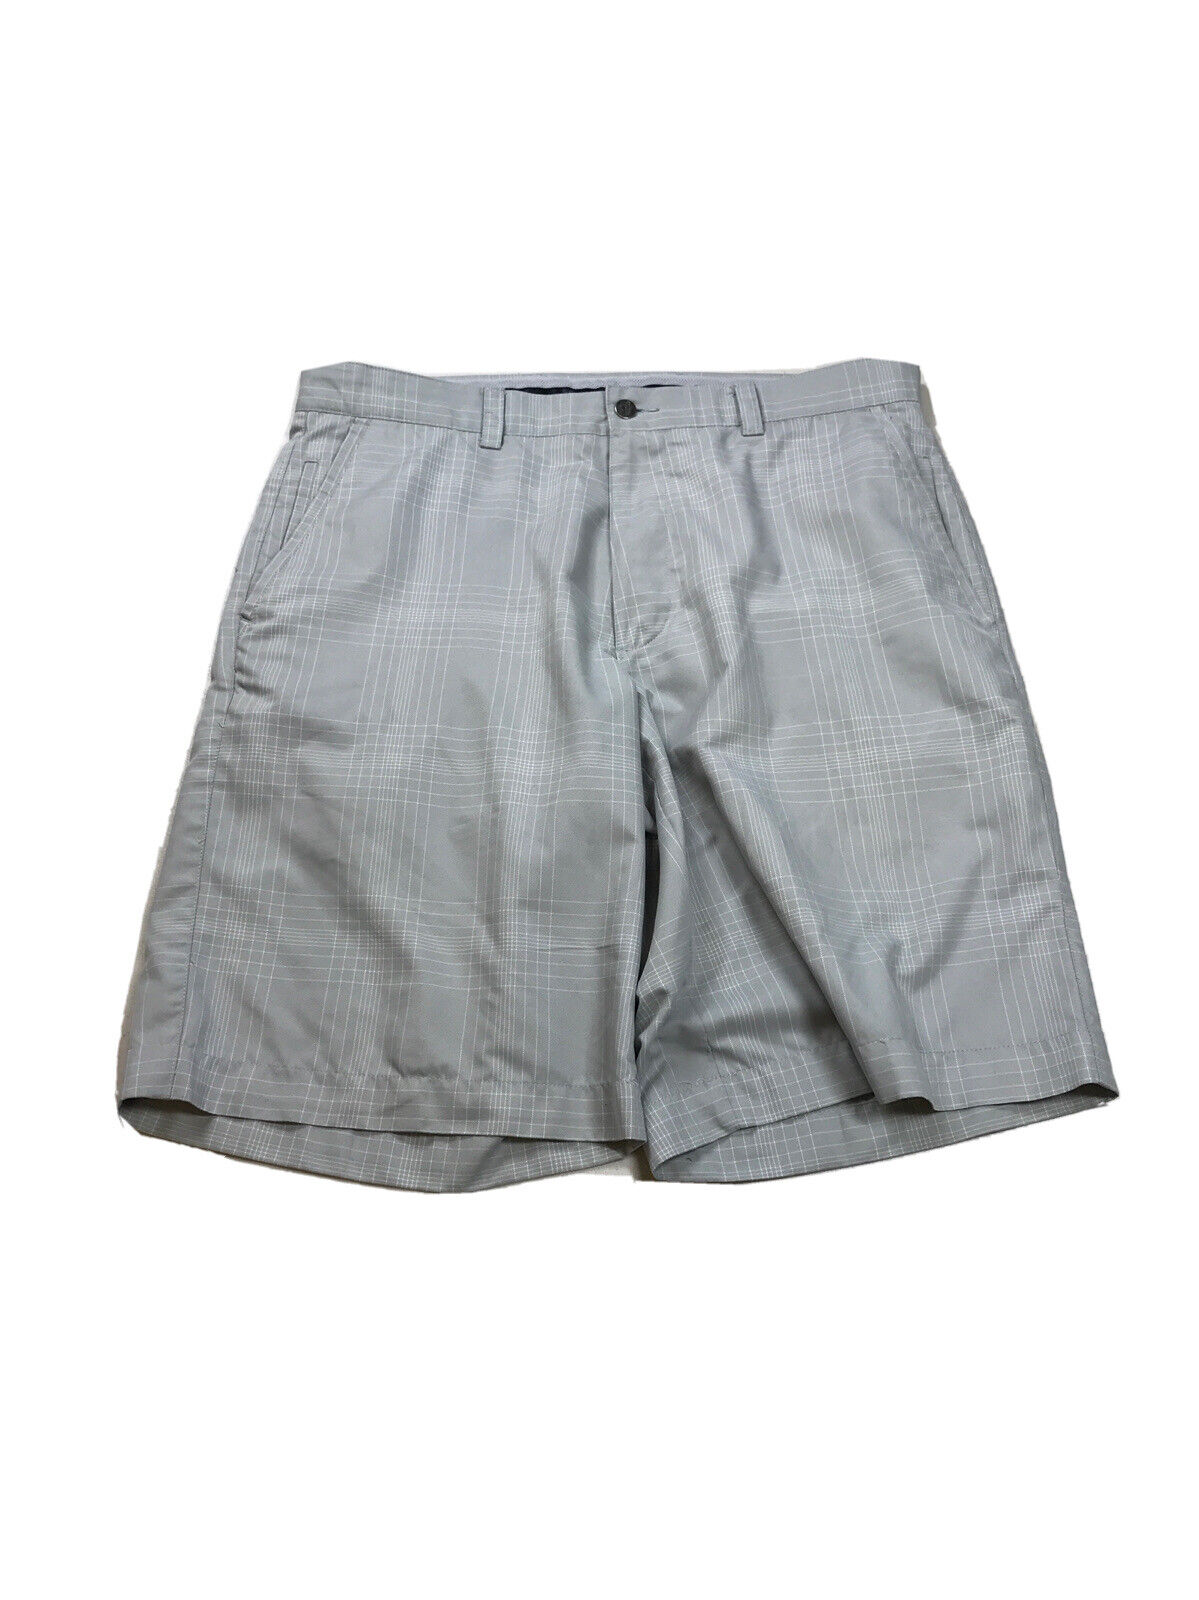 Pantalones cortos de golf Callaway serie X a cuadros de poliéster gris para hombre - 34